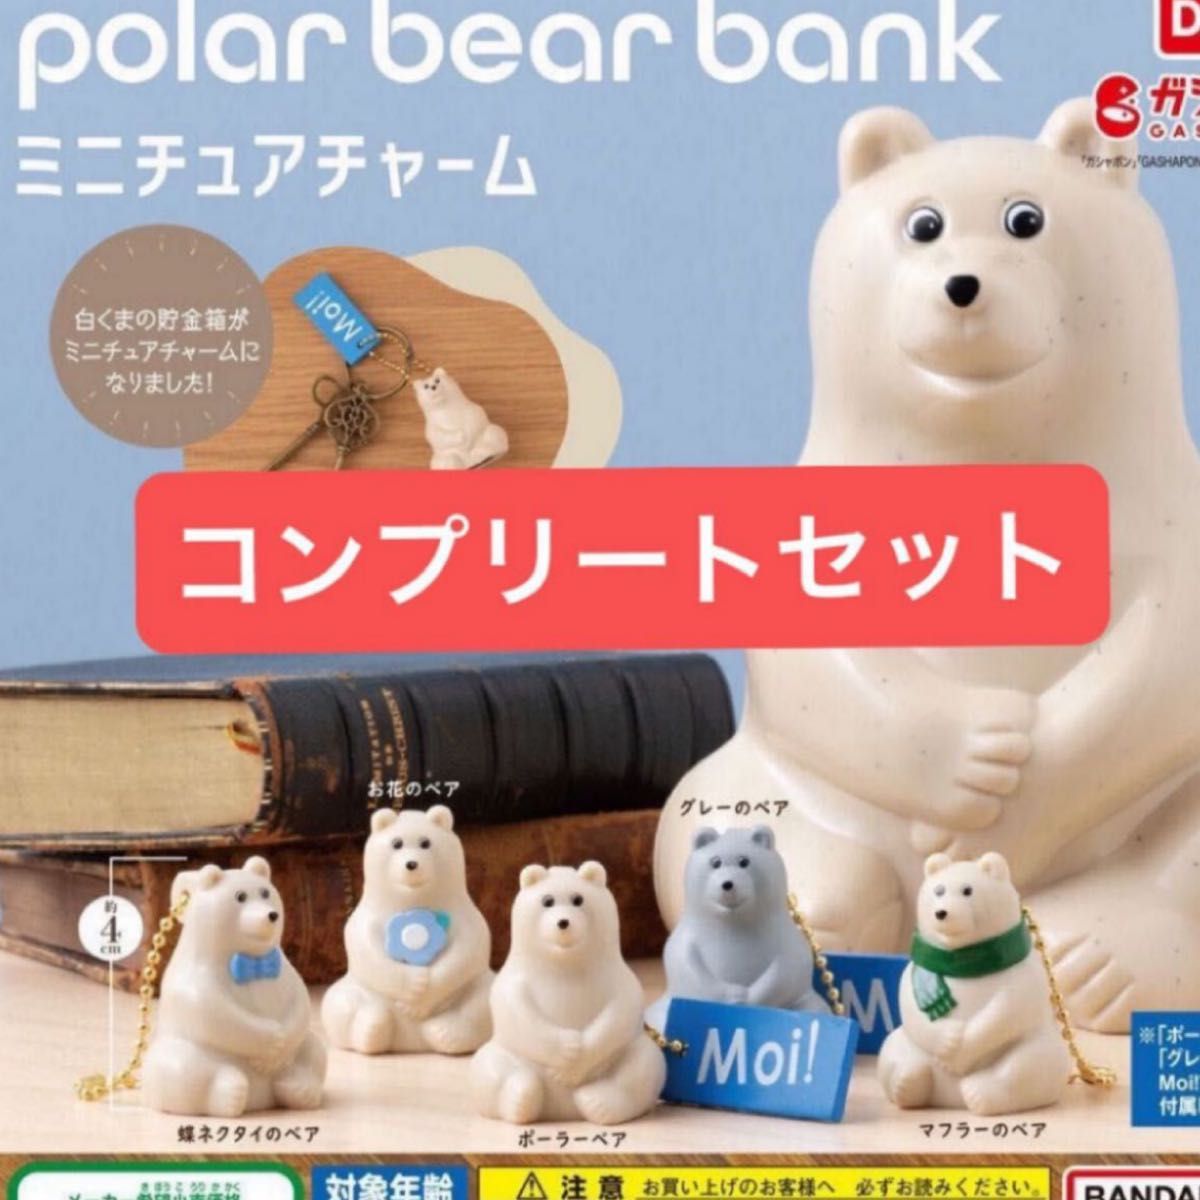 Polar bear Bank ポーラーベアバンク ミニチュアチャーム 全5種